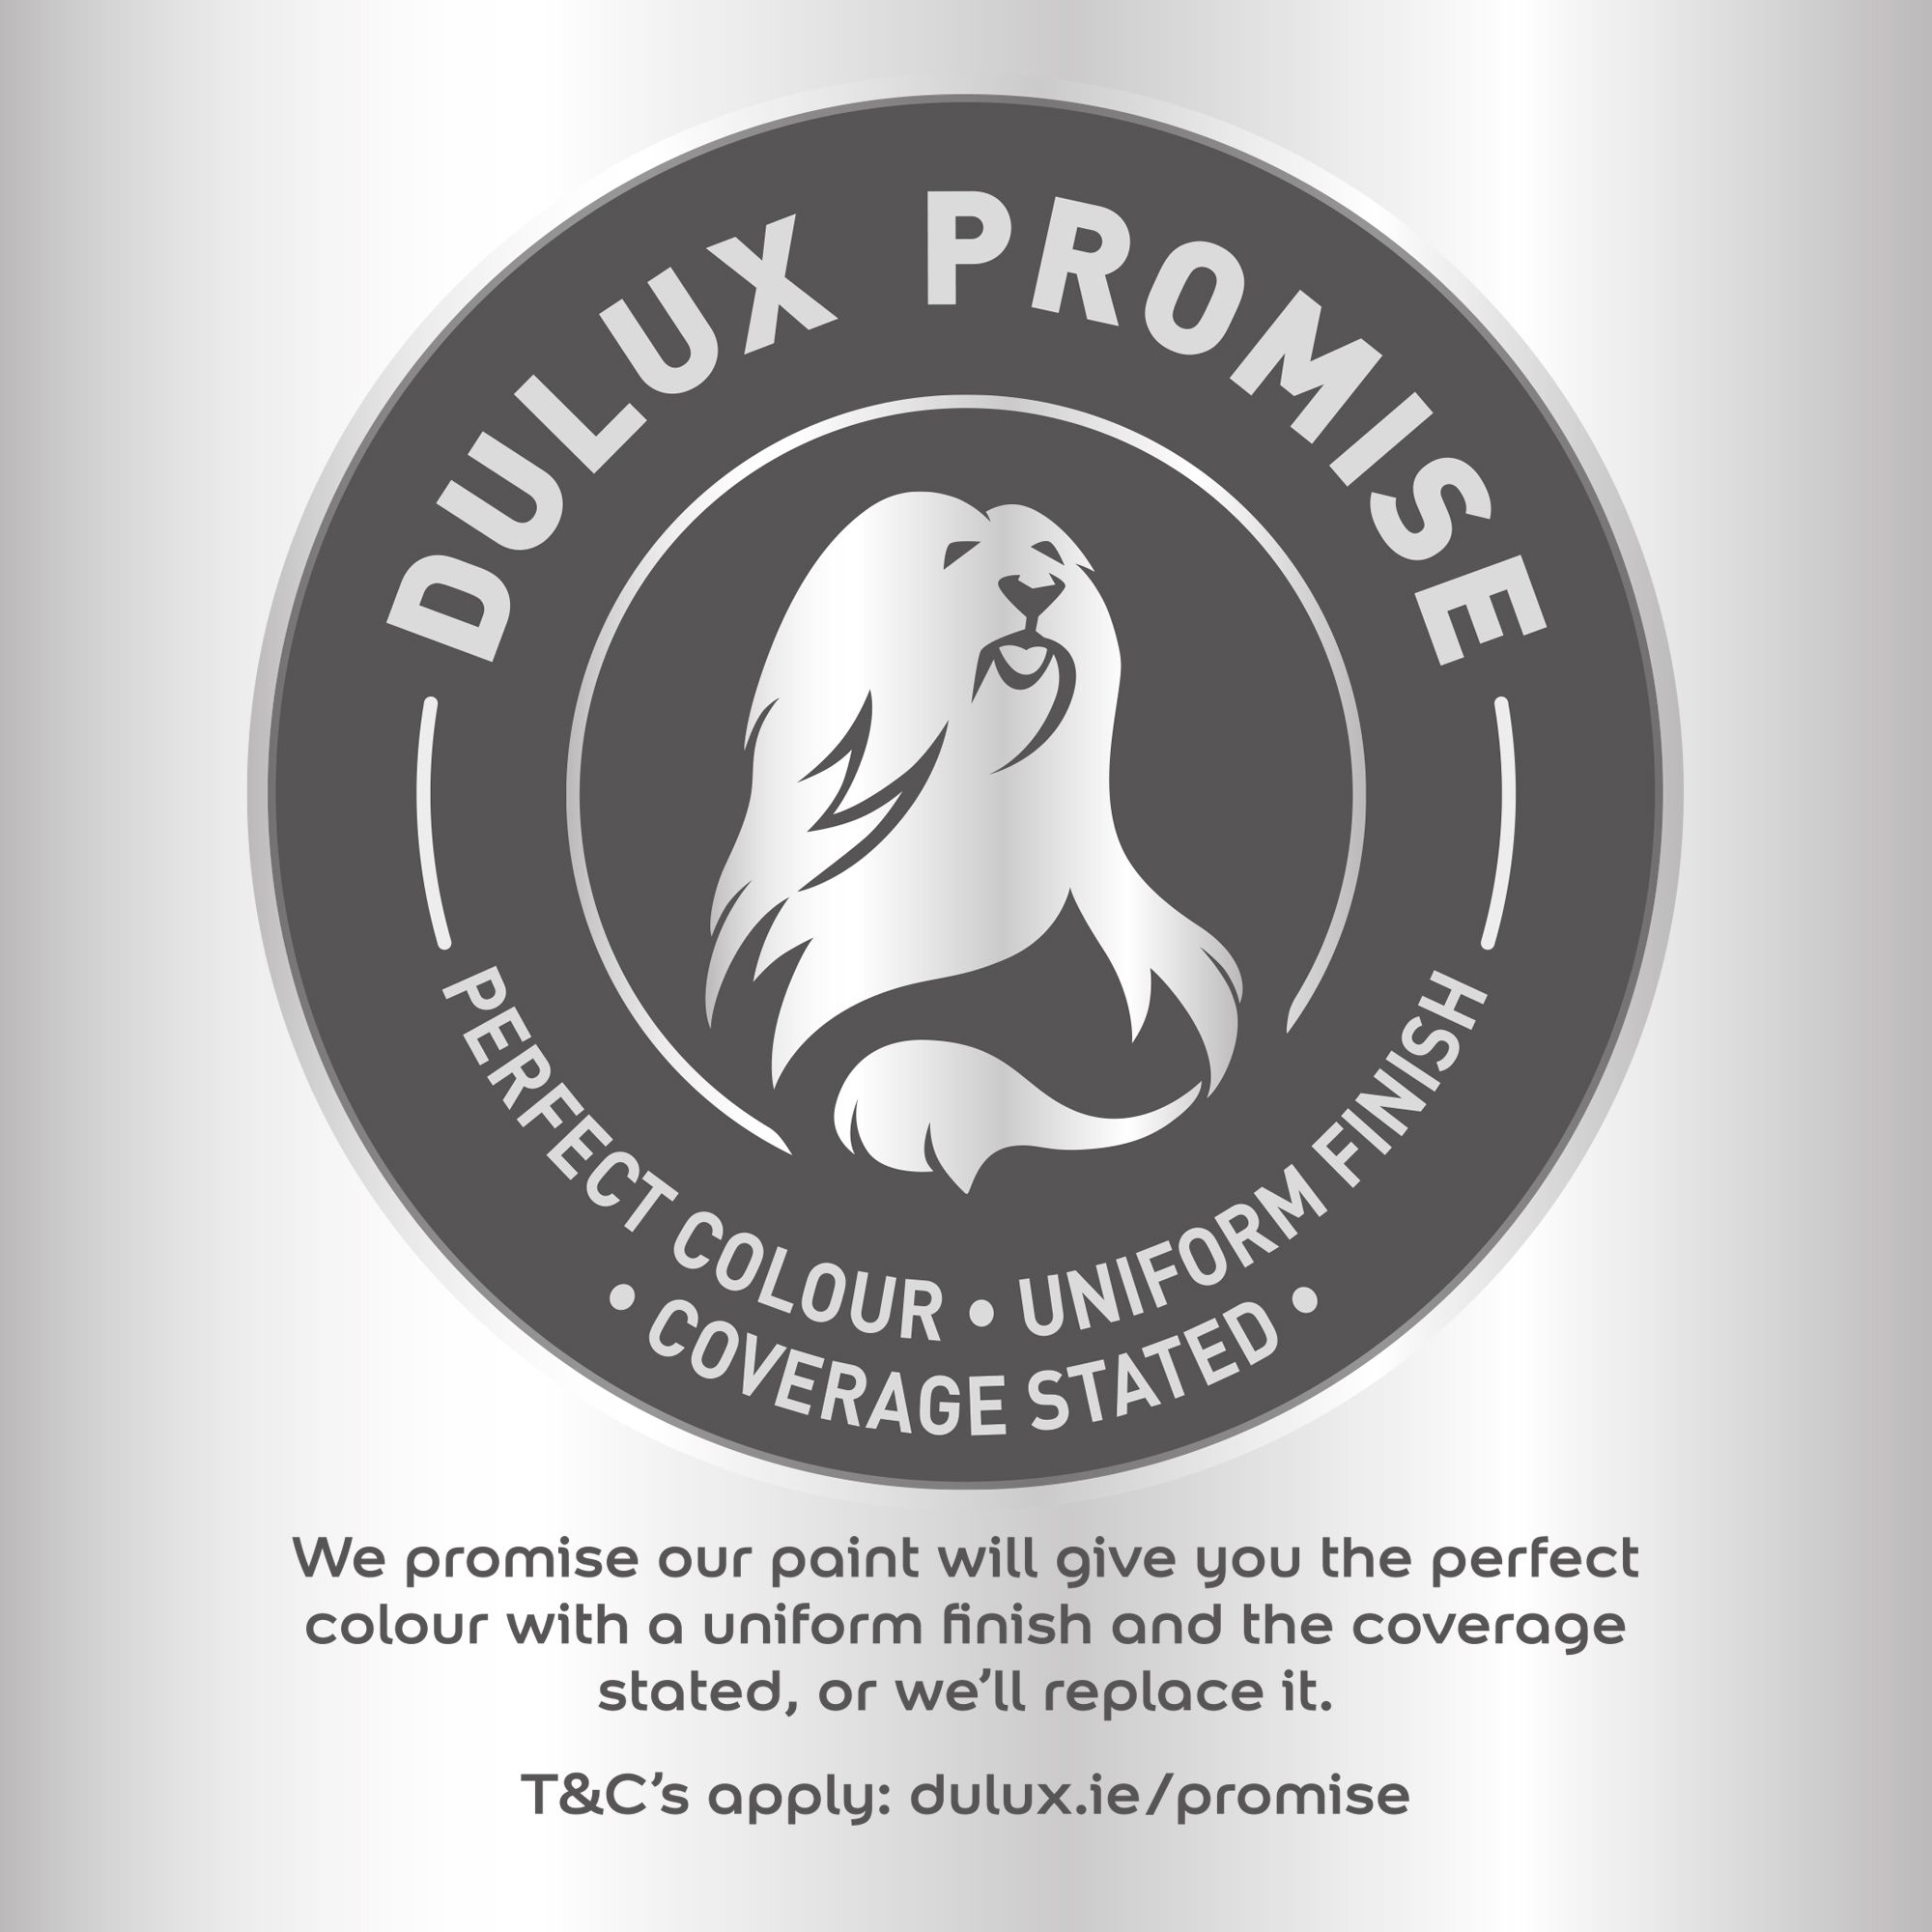 Dulux Easycare Silverwood Flat matt Emulsion paint, 2.5L